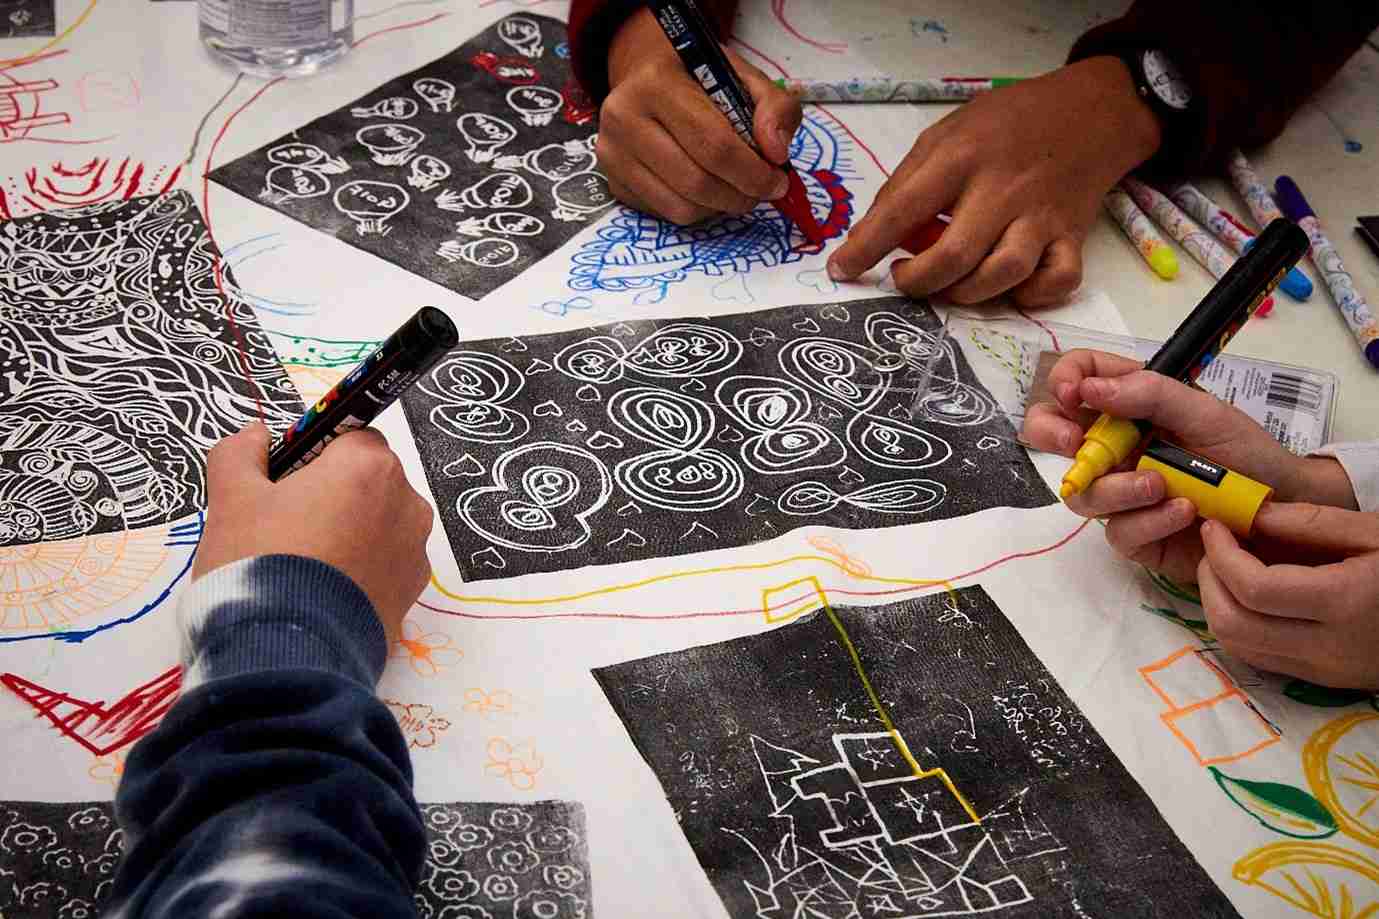 Hawkesbury Regional Gallery kickstarts ‘Culture Dose for Kids